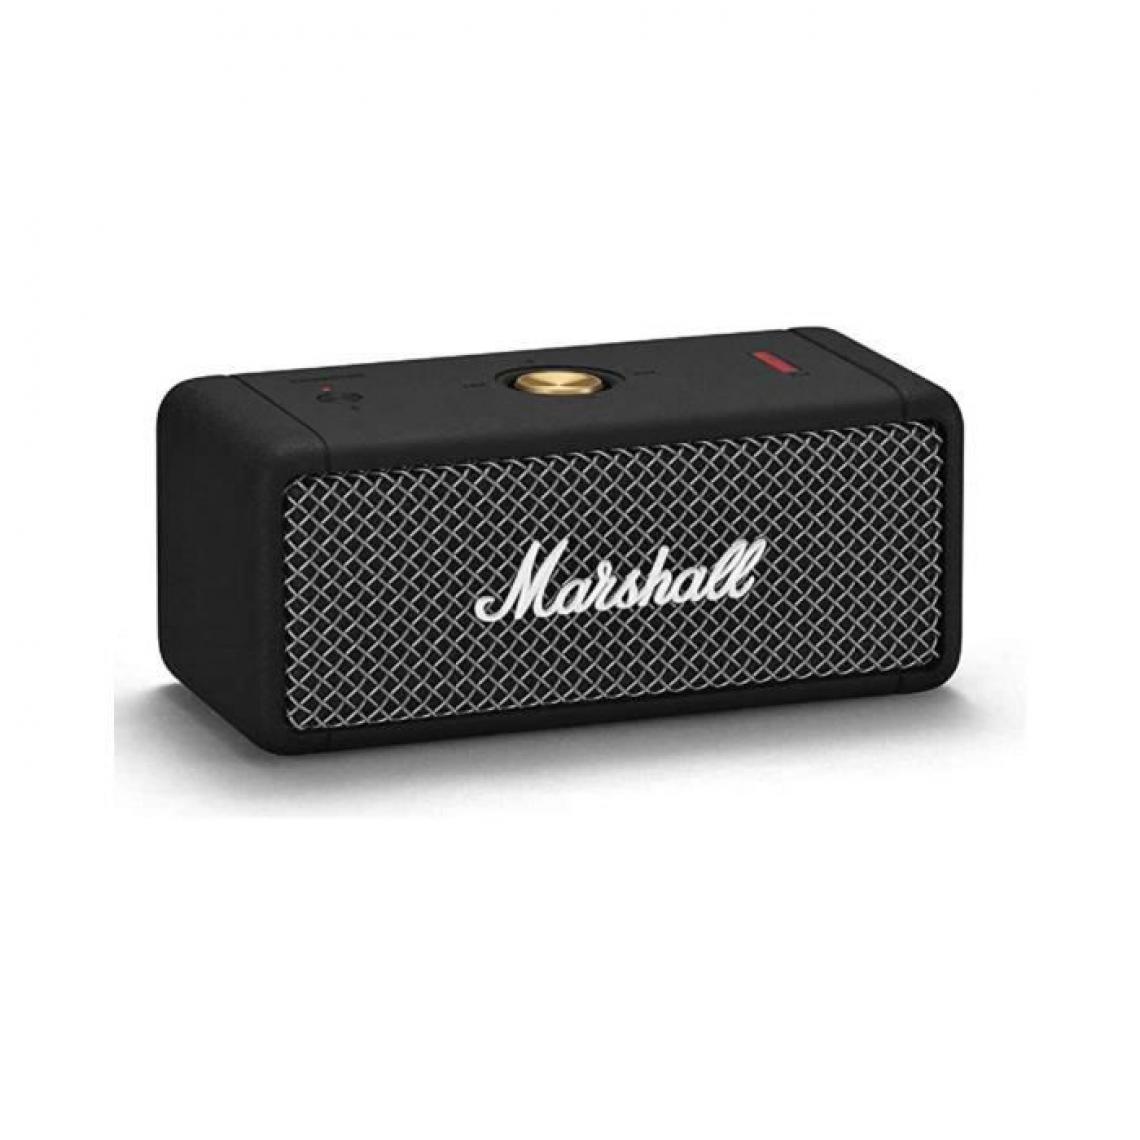 Marshall - MARSHALL Emberton - Enceinte portable bluetooth étanche - True Stereophonic son 360° - Autonomie 20h - Noir - Enceintes Hifi